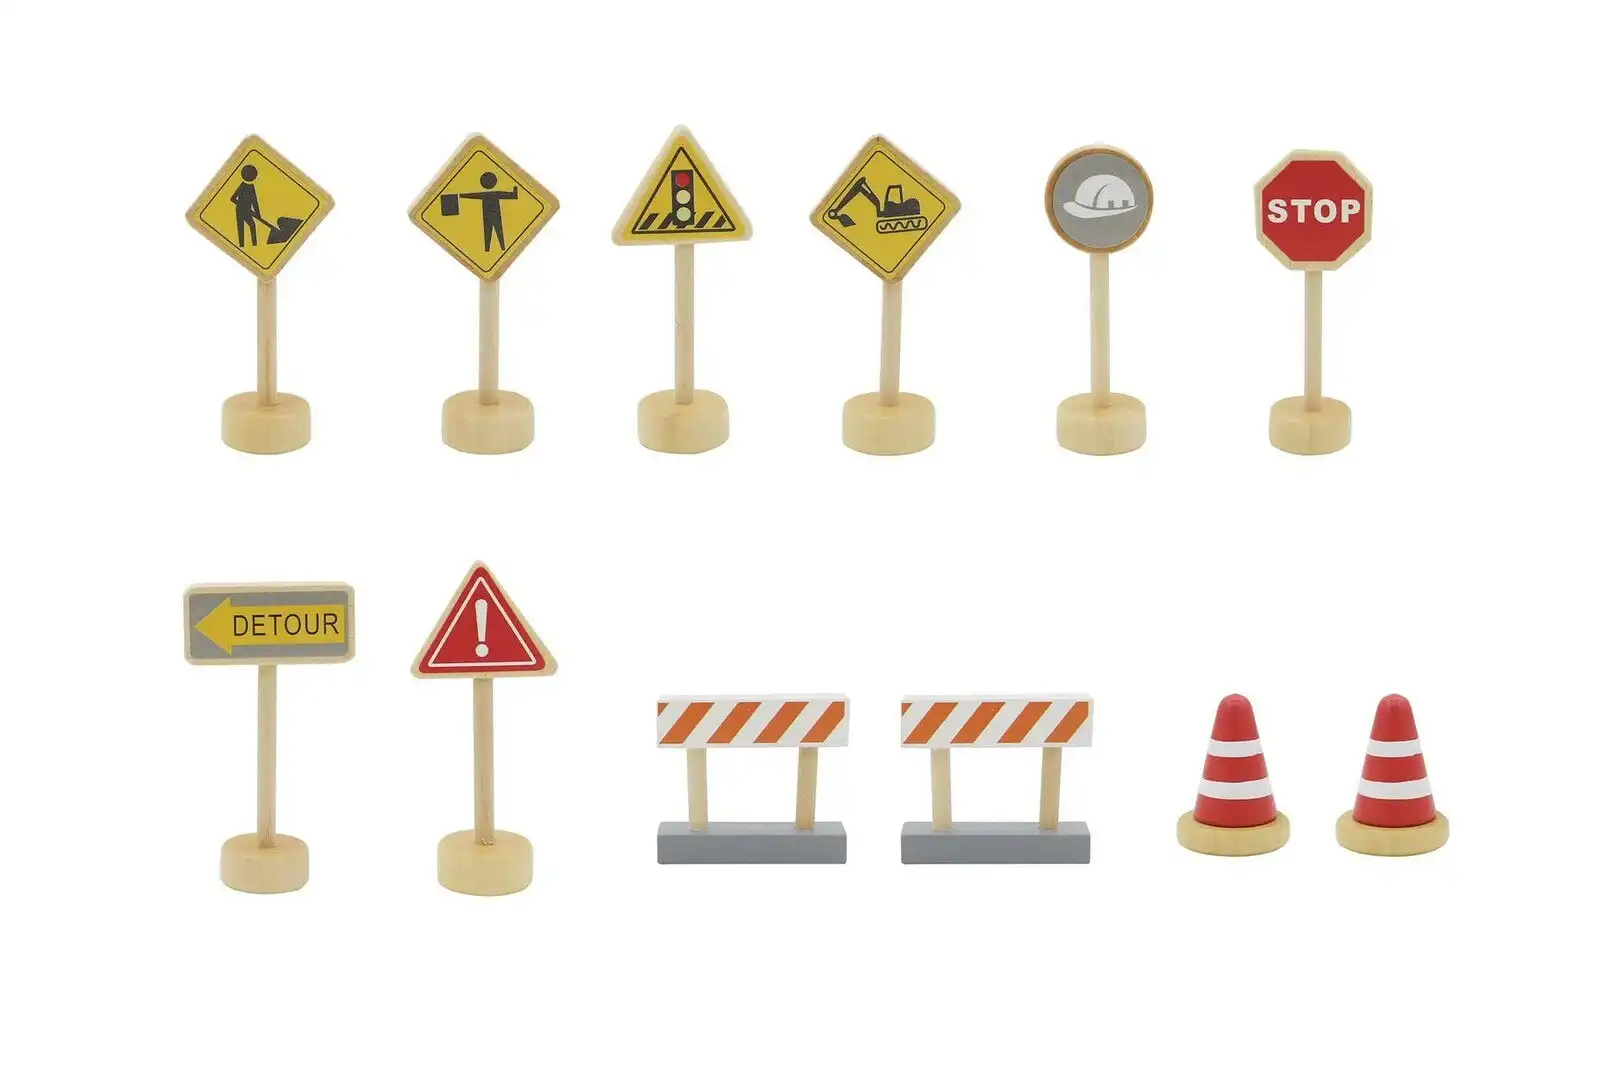 Kaper Kidz Wooden Construction Road Sign Kids Pretend Play Educational Toy 3+